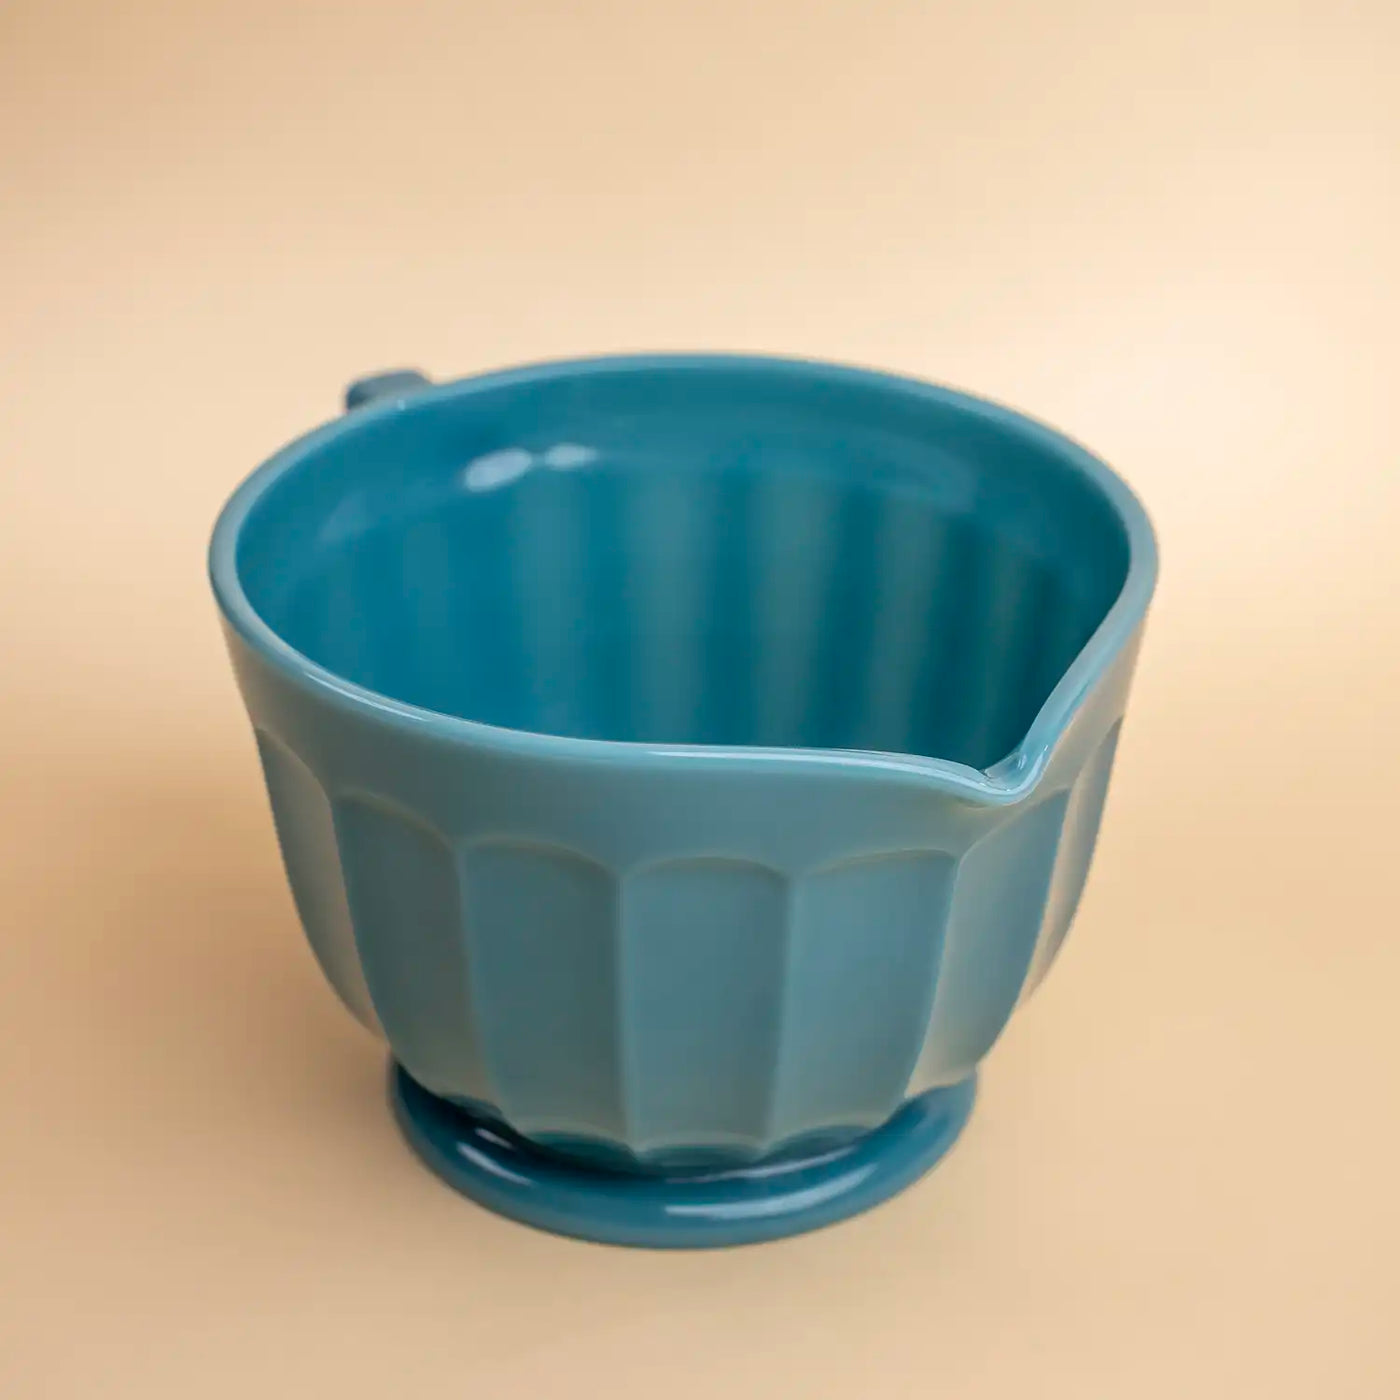 Mosser Glassware Georgia Blue Collection Batter Bowl